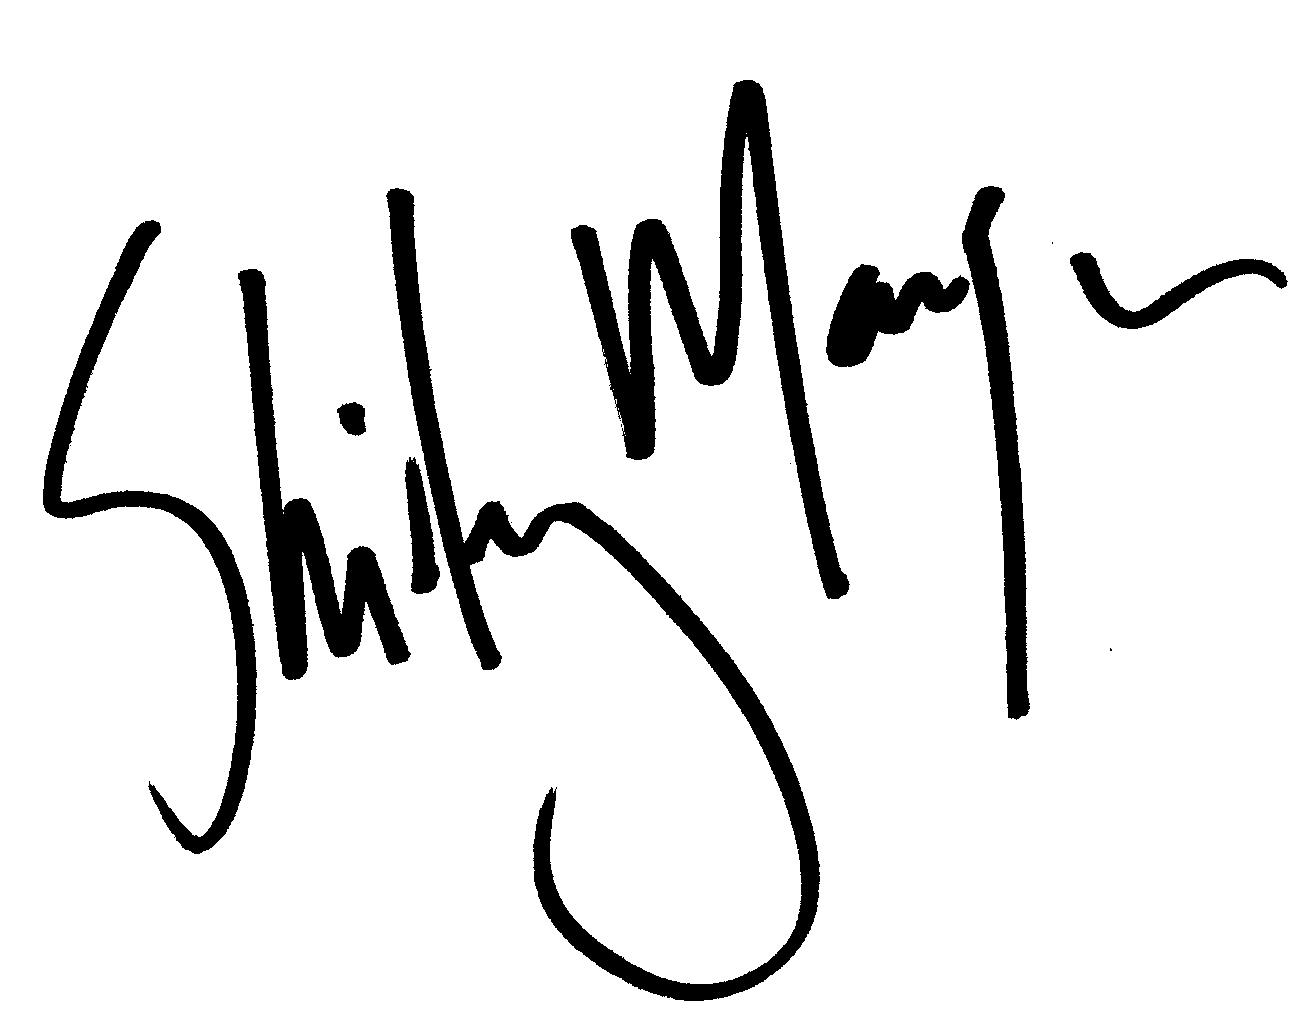 Shirley Manson autograph facsimile